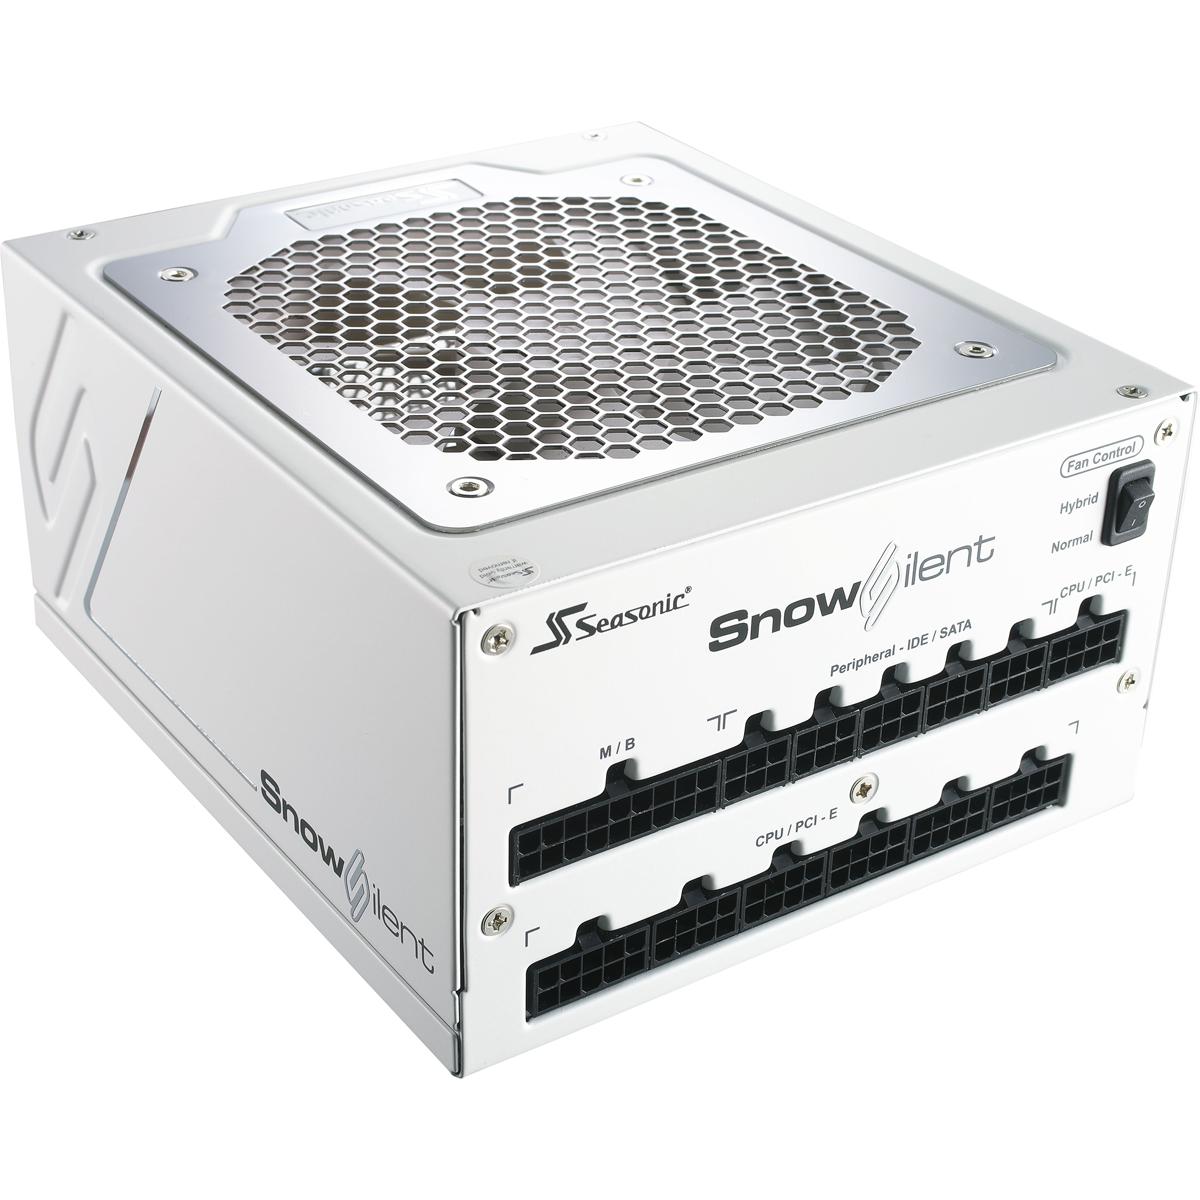 Nguồn máy tính SeaSonic Snow Silent 750W 80+ Platinum ATX slide image 0